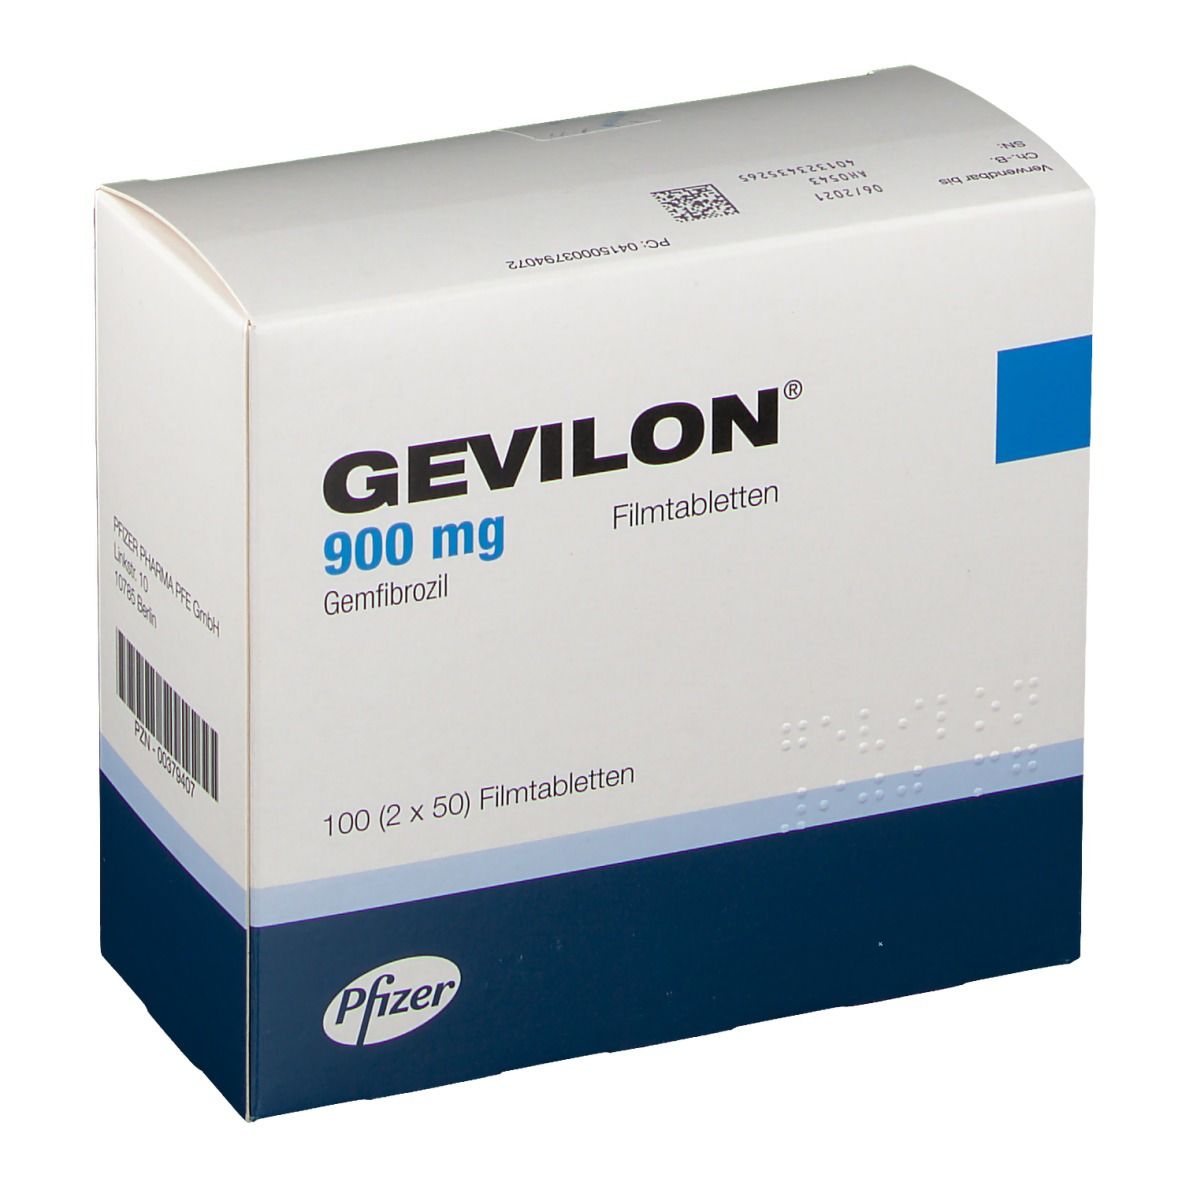 GEVILON® 900 mg